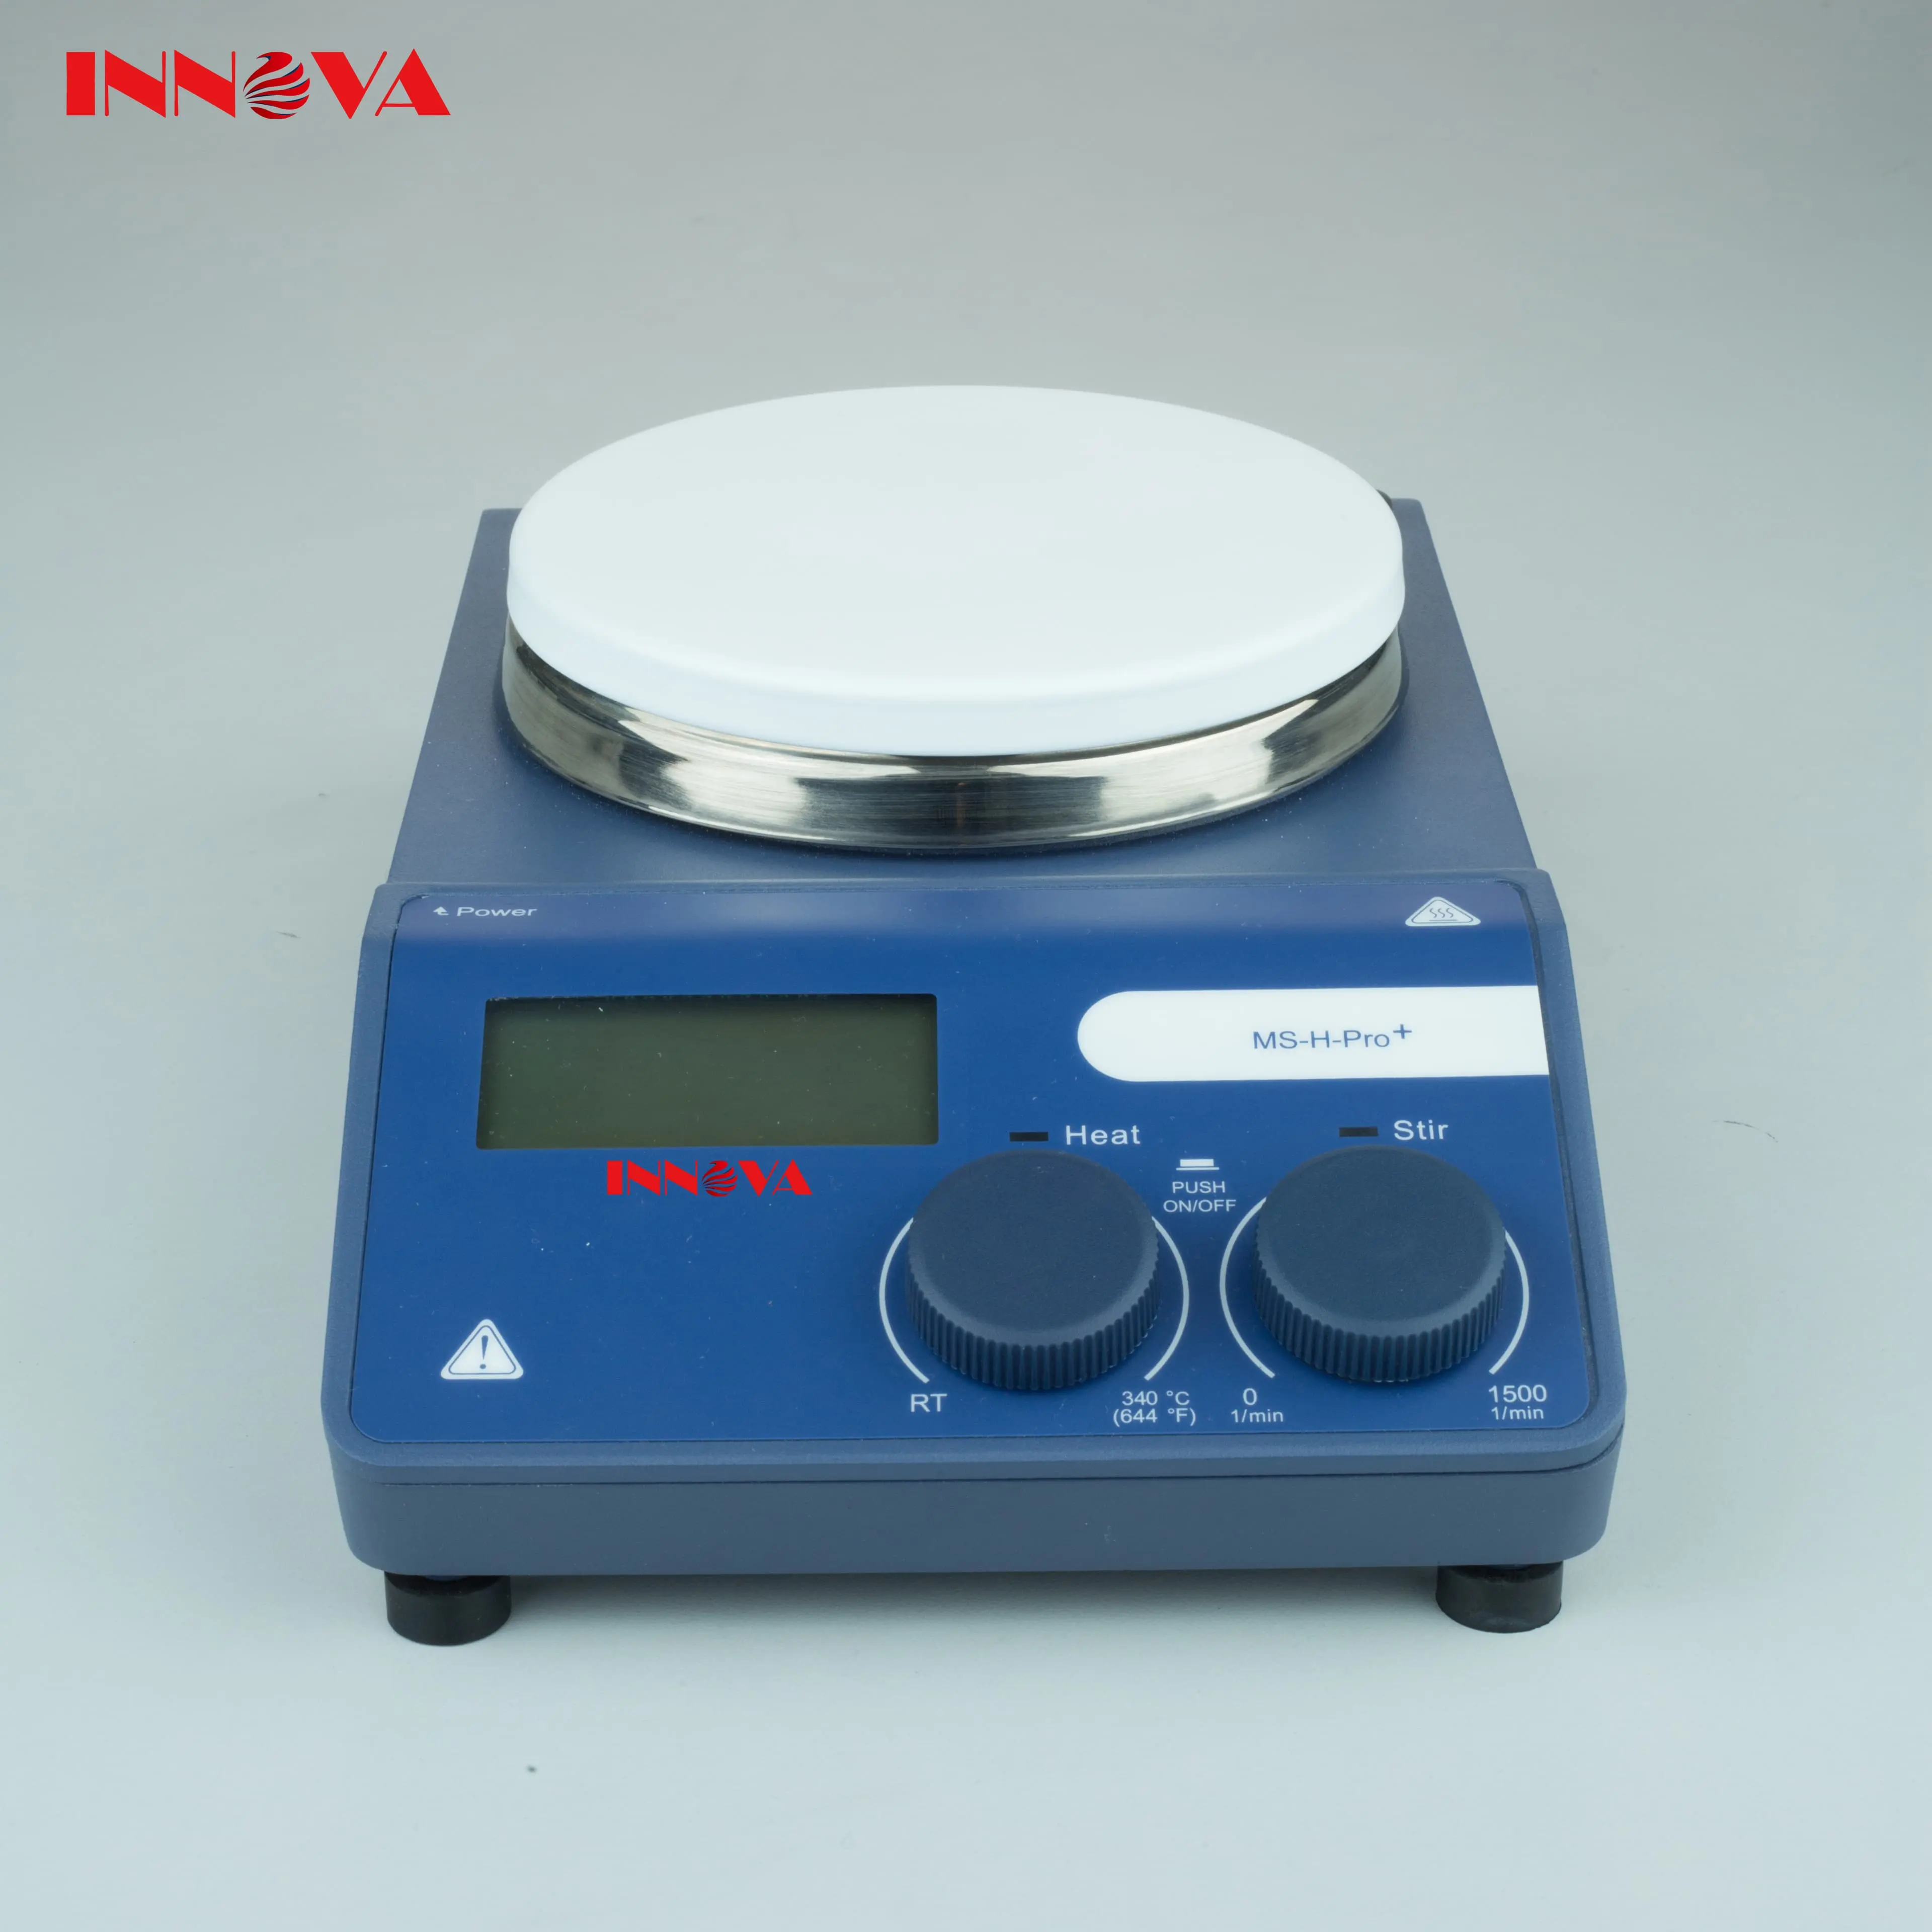 INNOVA MS7 scale display non-hotplate magnetic stirrer digital multi position heating magnetic stirrer